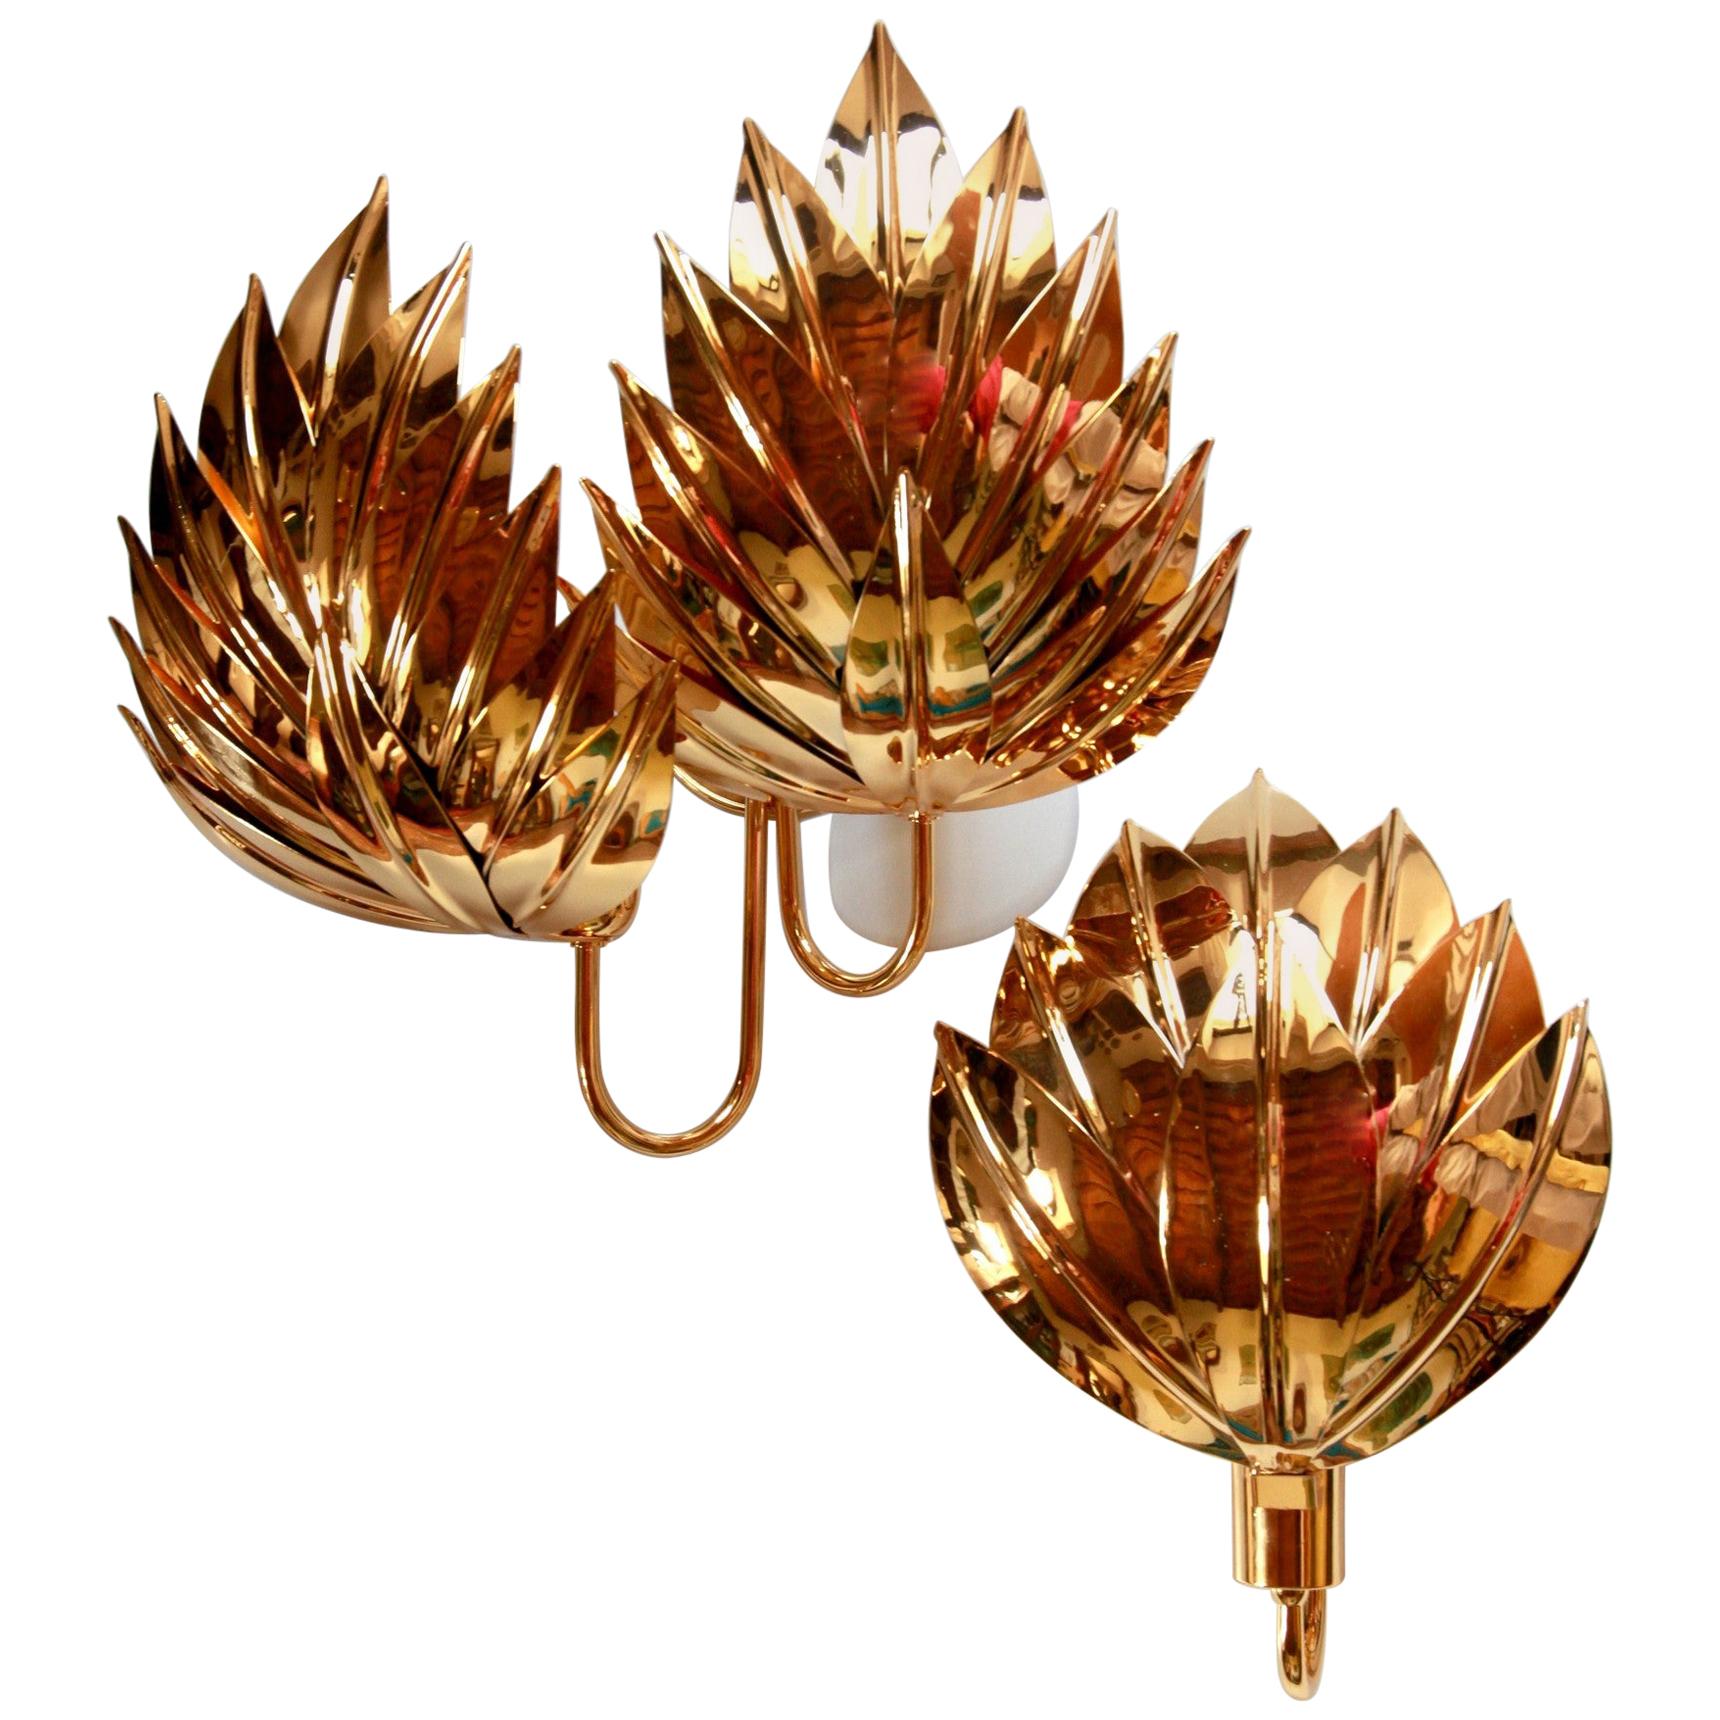 Full Set of 9 Palm Sconces, Brass Gold-Plated, Maison Jansen Attribution